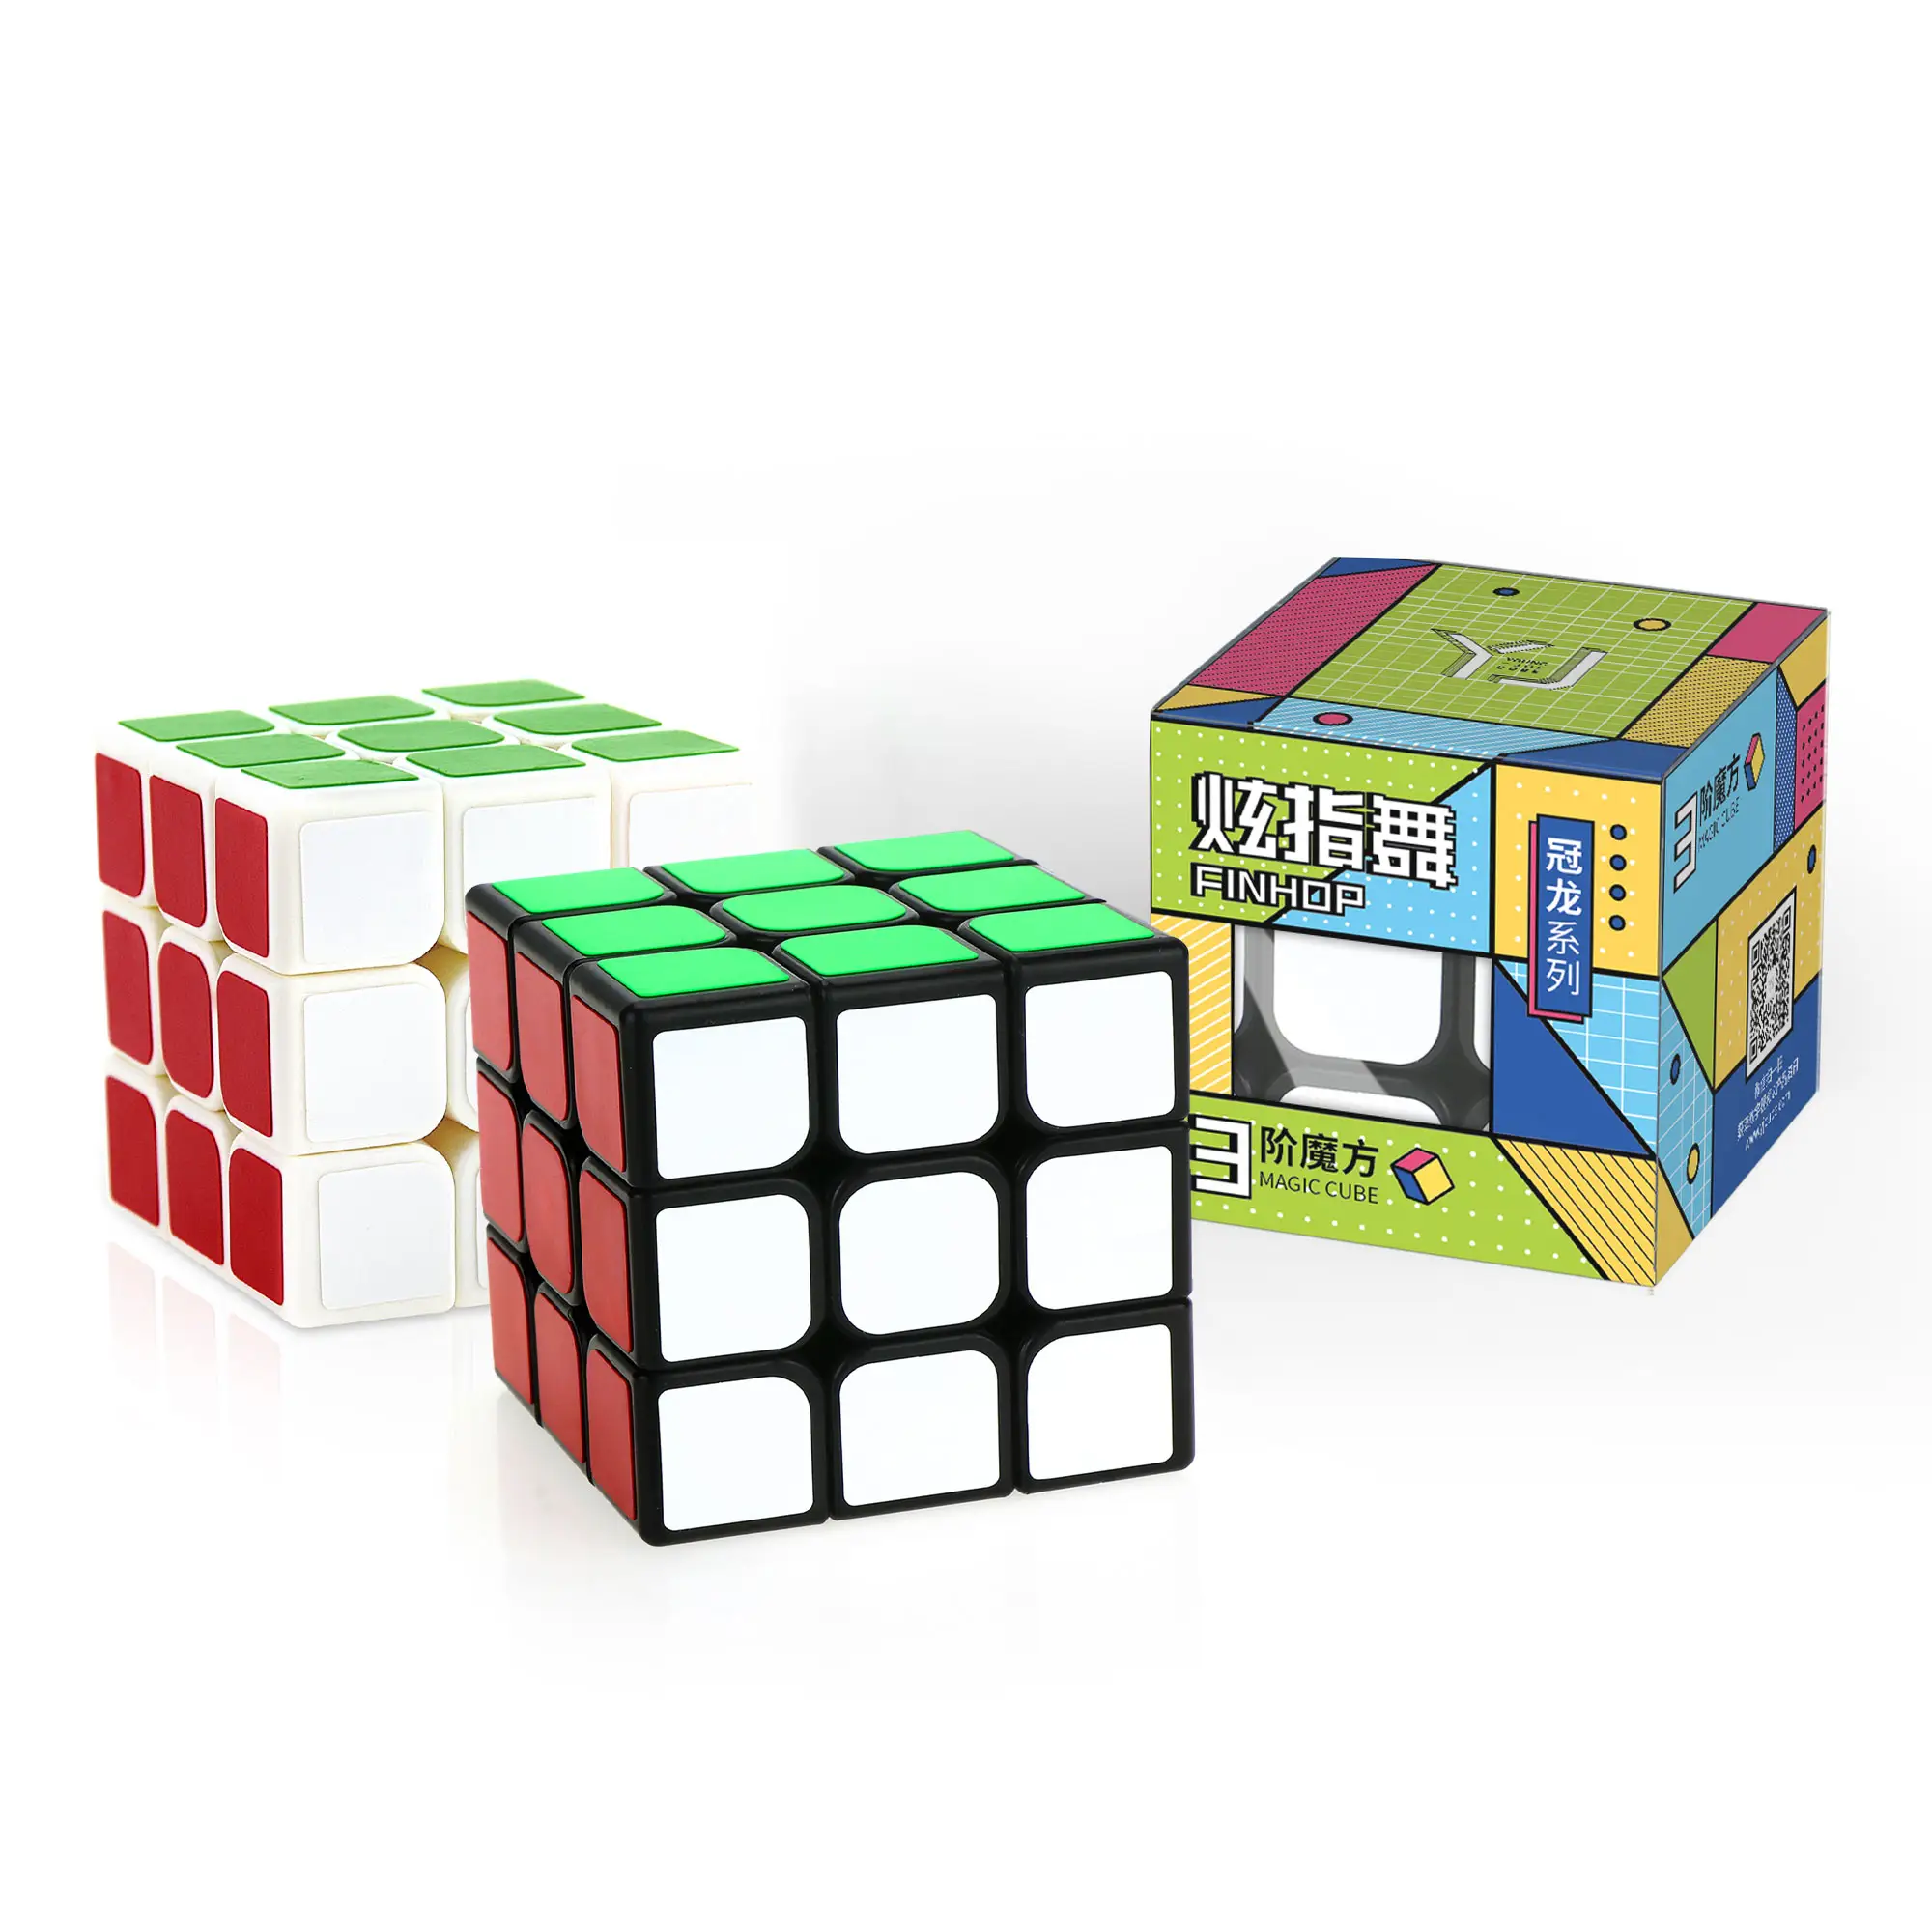 YJ Yongjun - Guanlong V3 Magical 3x3x3 Hot Selling Promotion Educational Puzzle Toy Fidget Cubes 3x3